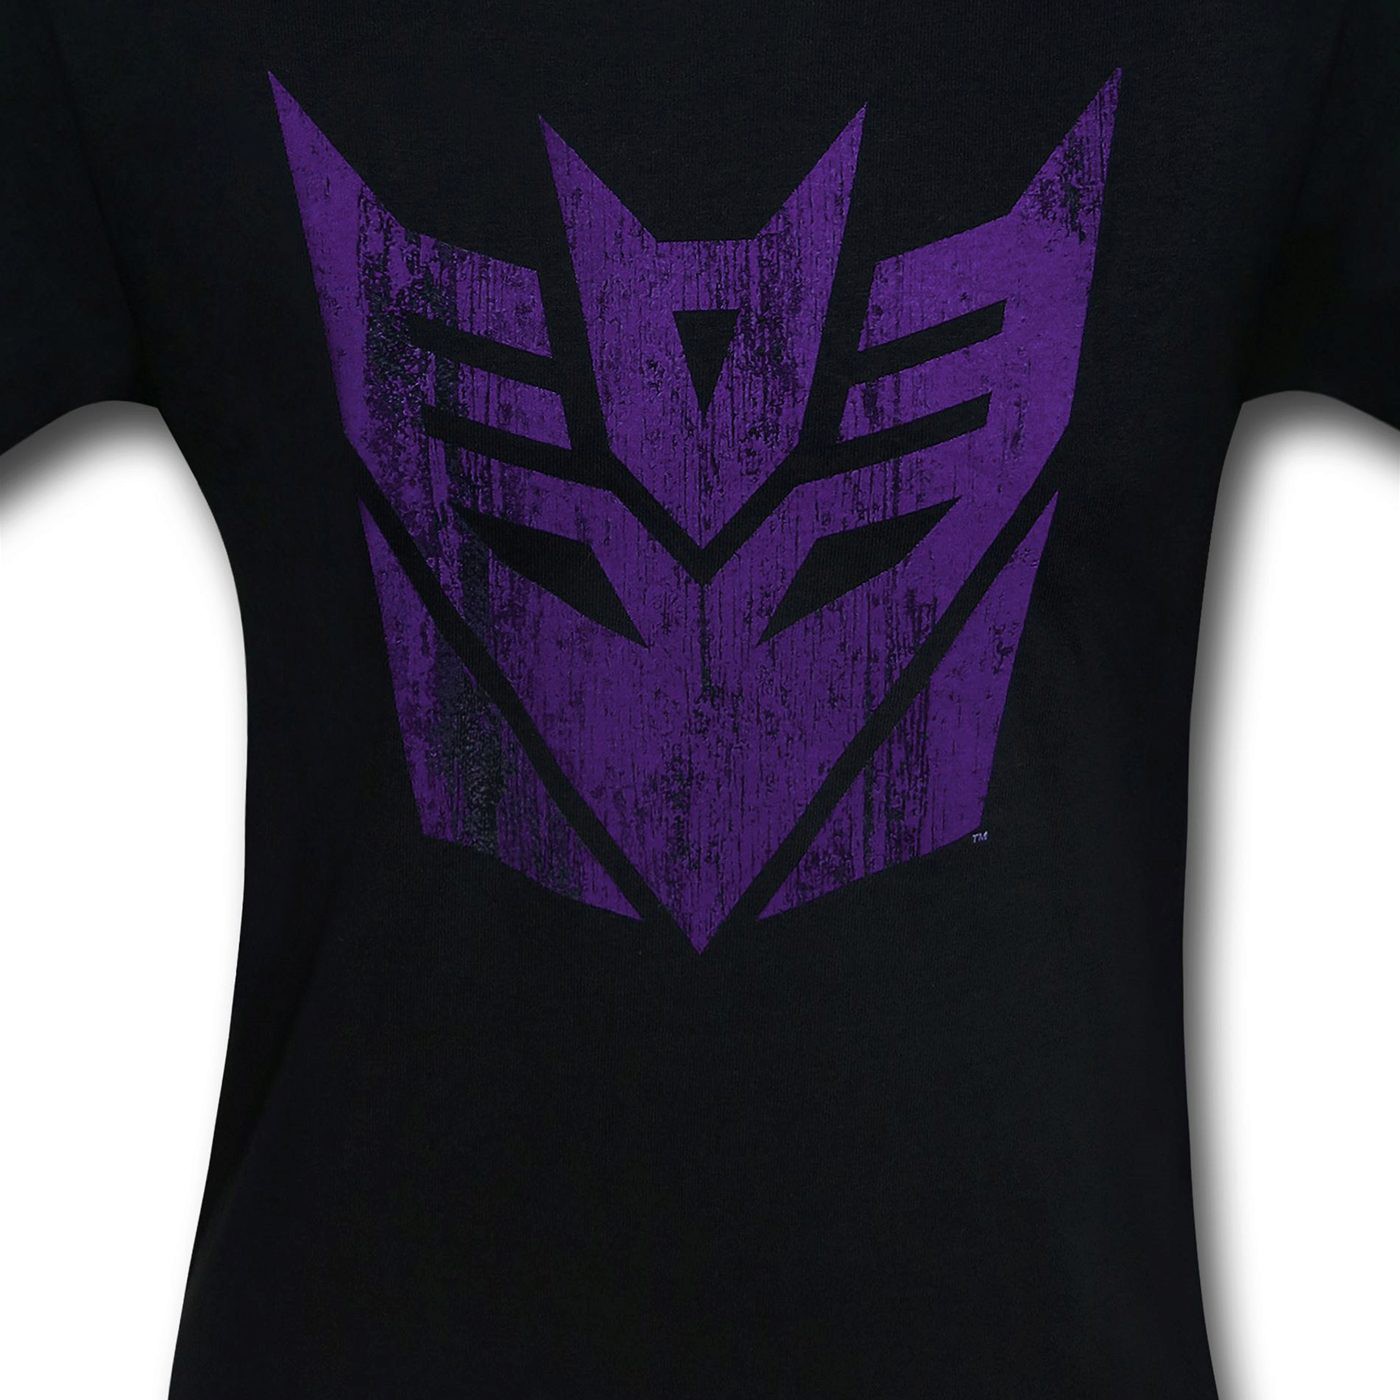 Transformers Decepticon Distressed Symbol Black T-Shirt